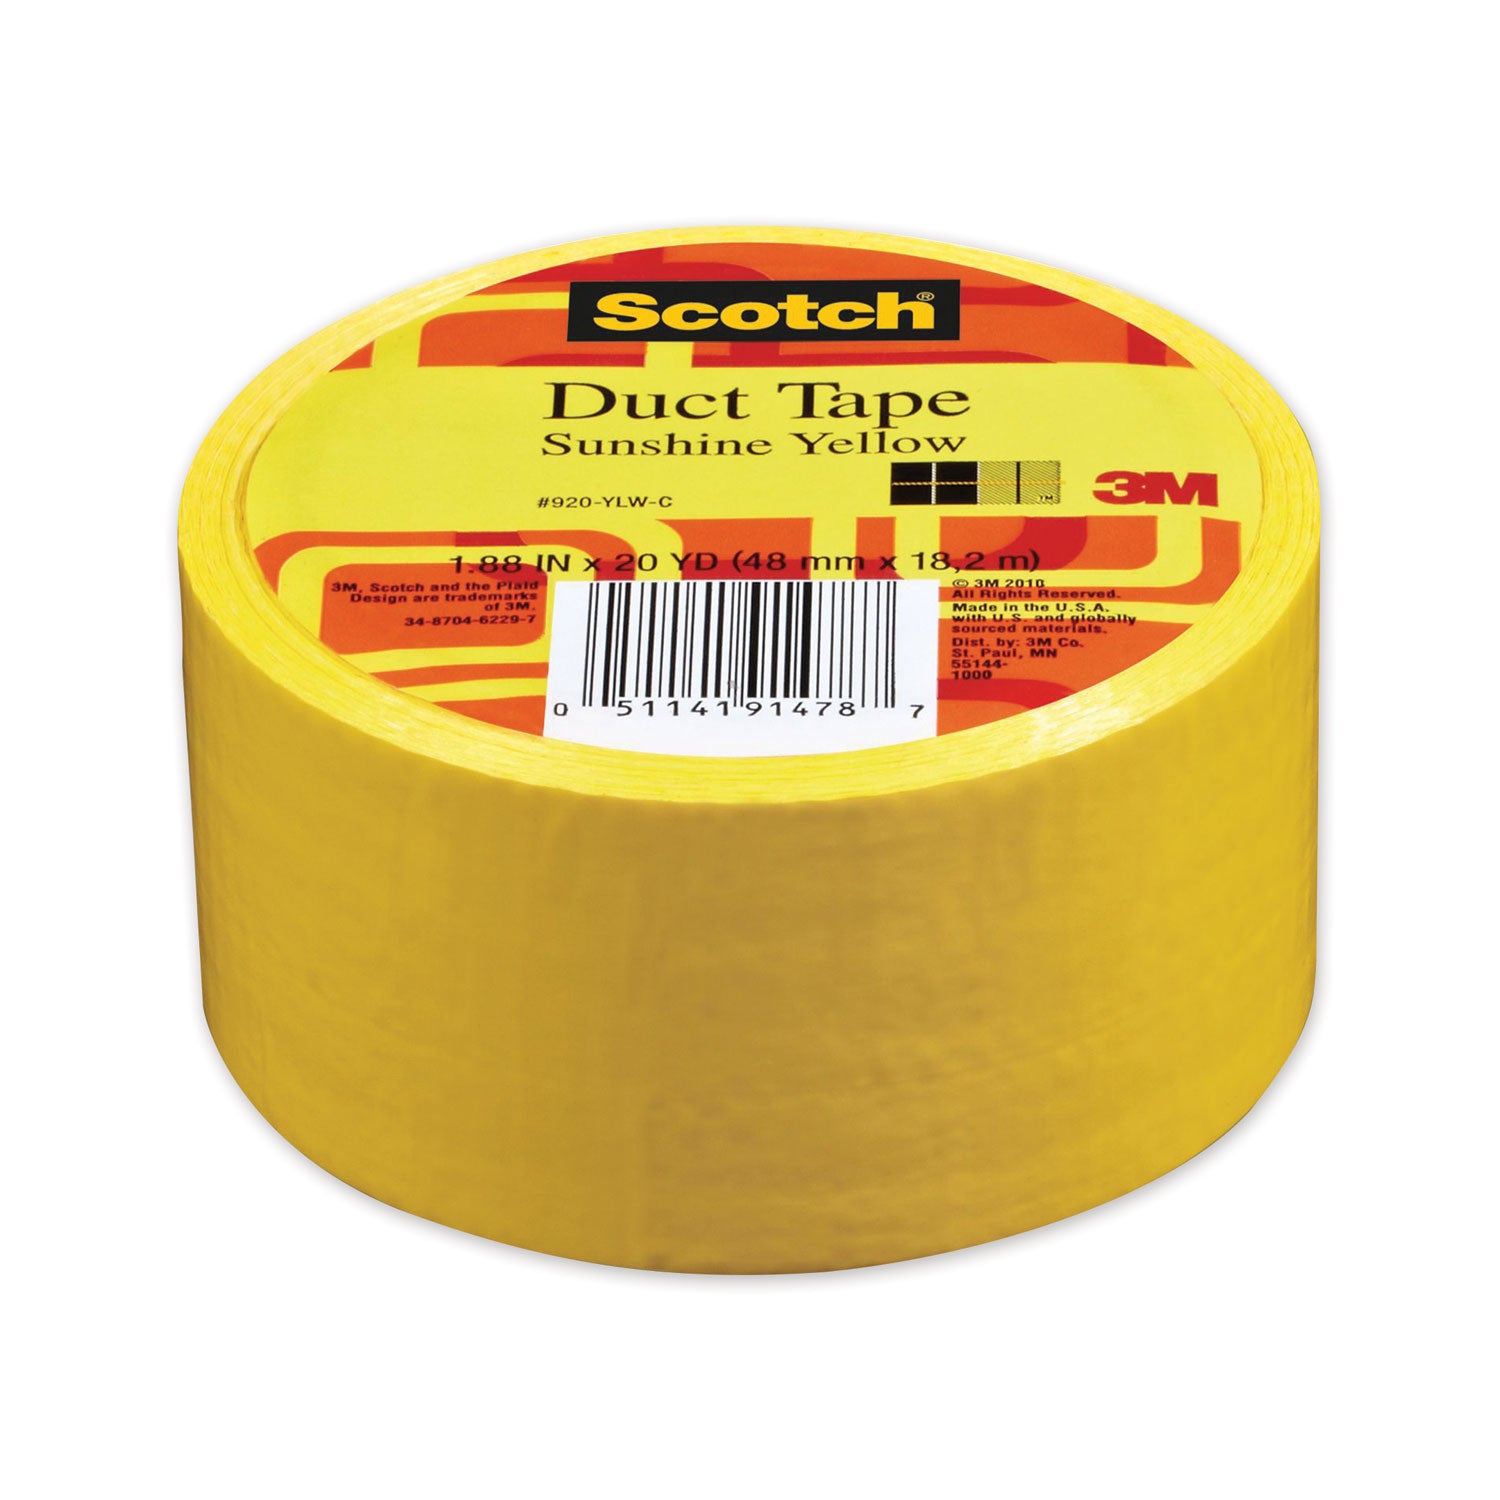 duct-tape-188-x-20-yds-sunshine-yellow_mmm70005058196 - 1